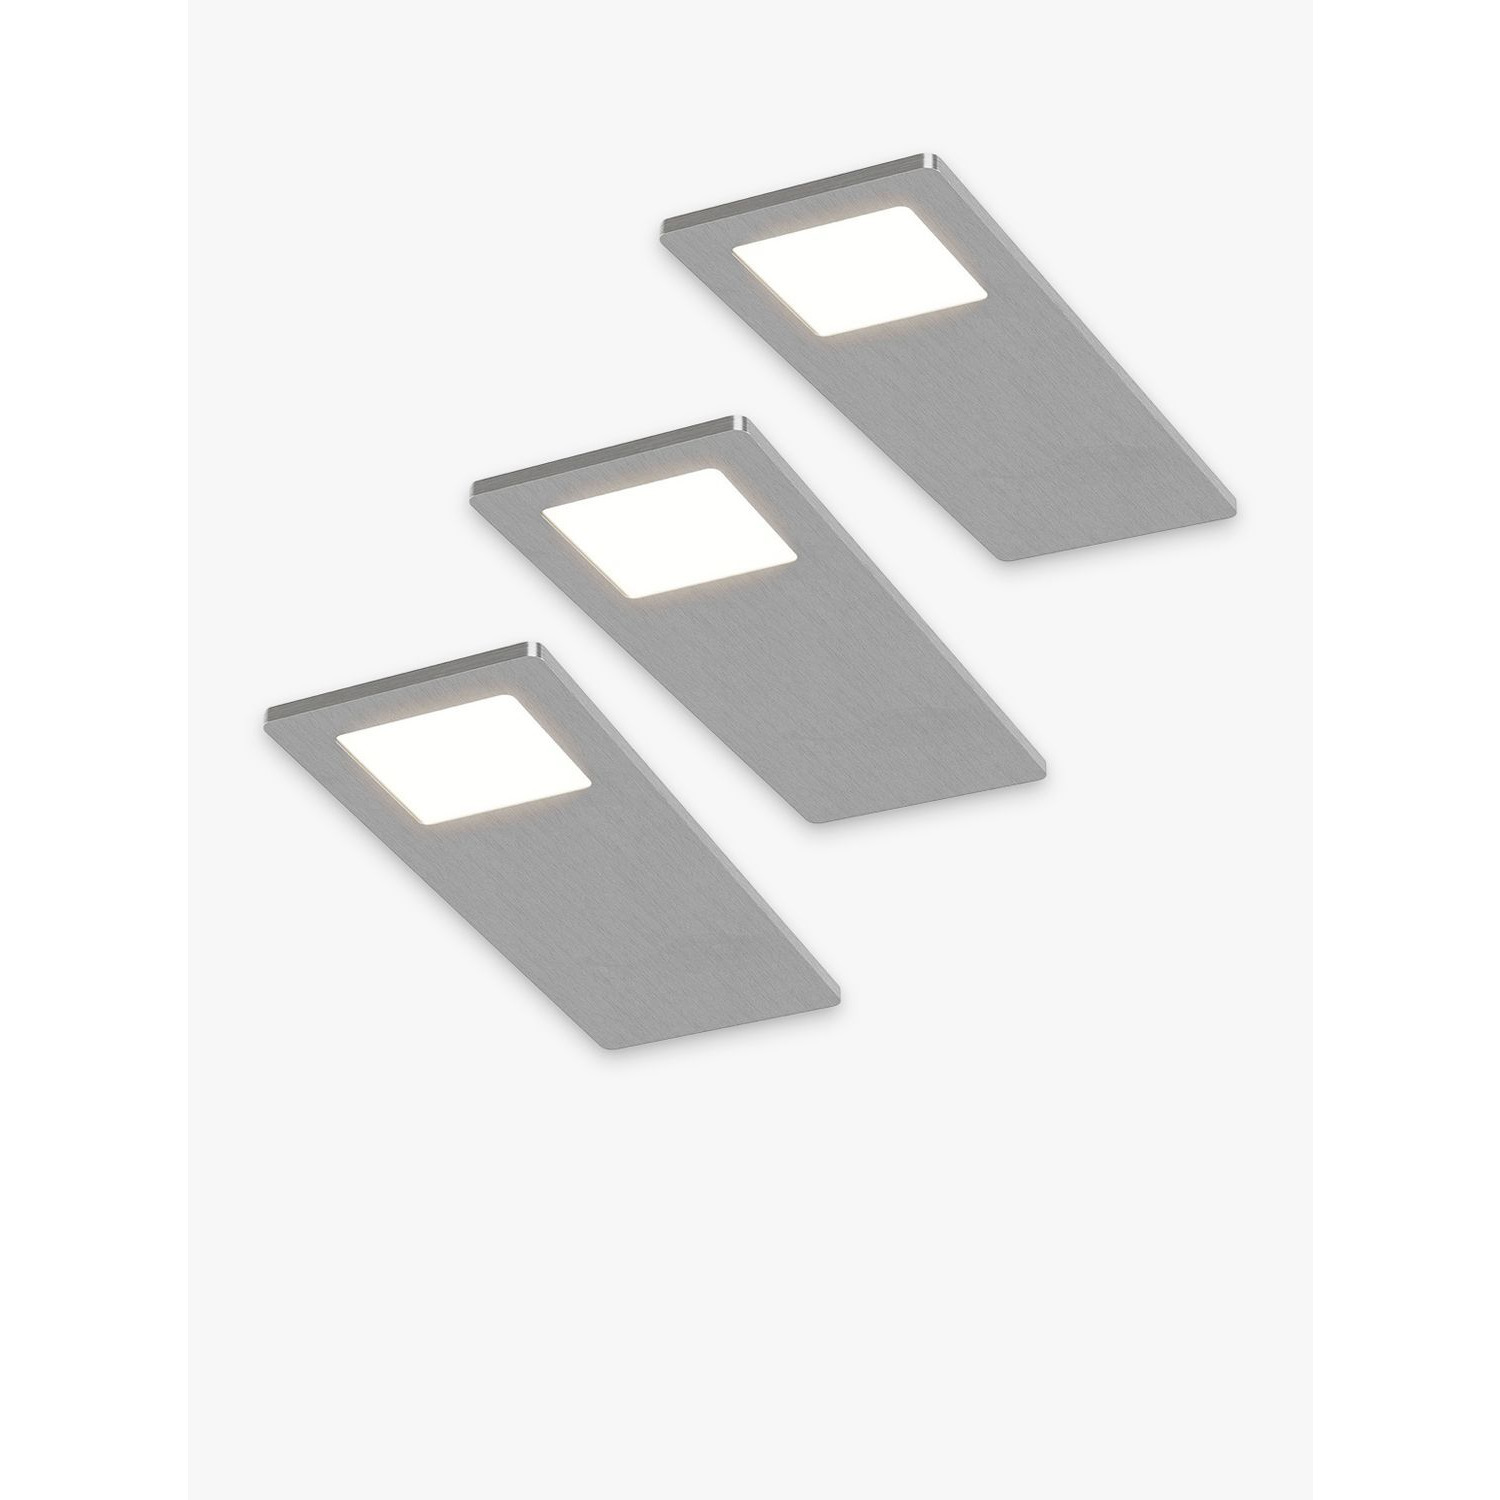 Sensio Velos LED Under Kitchen Cabinet Light, Pack of 3, Natural White Light - image 1